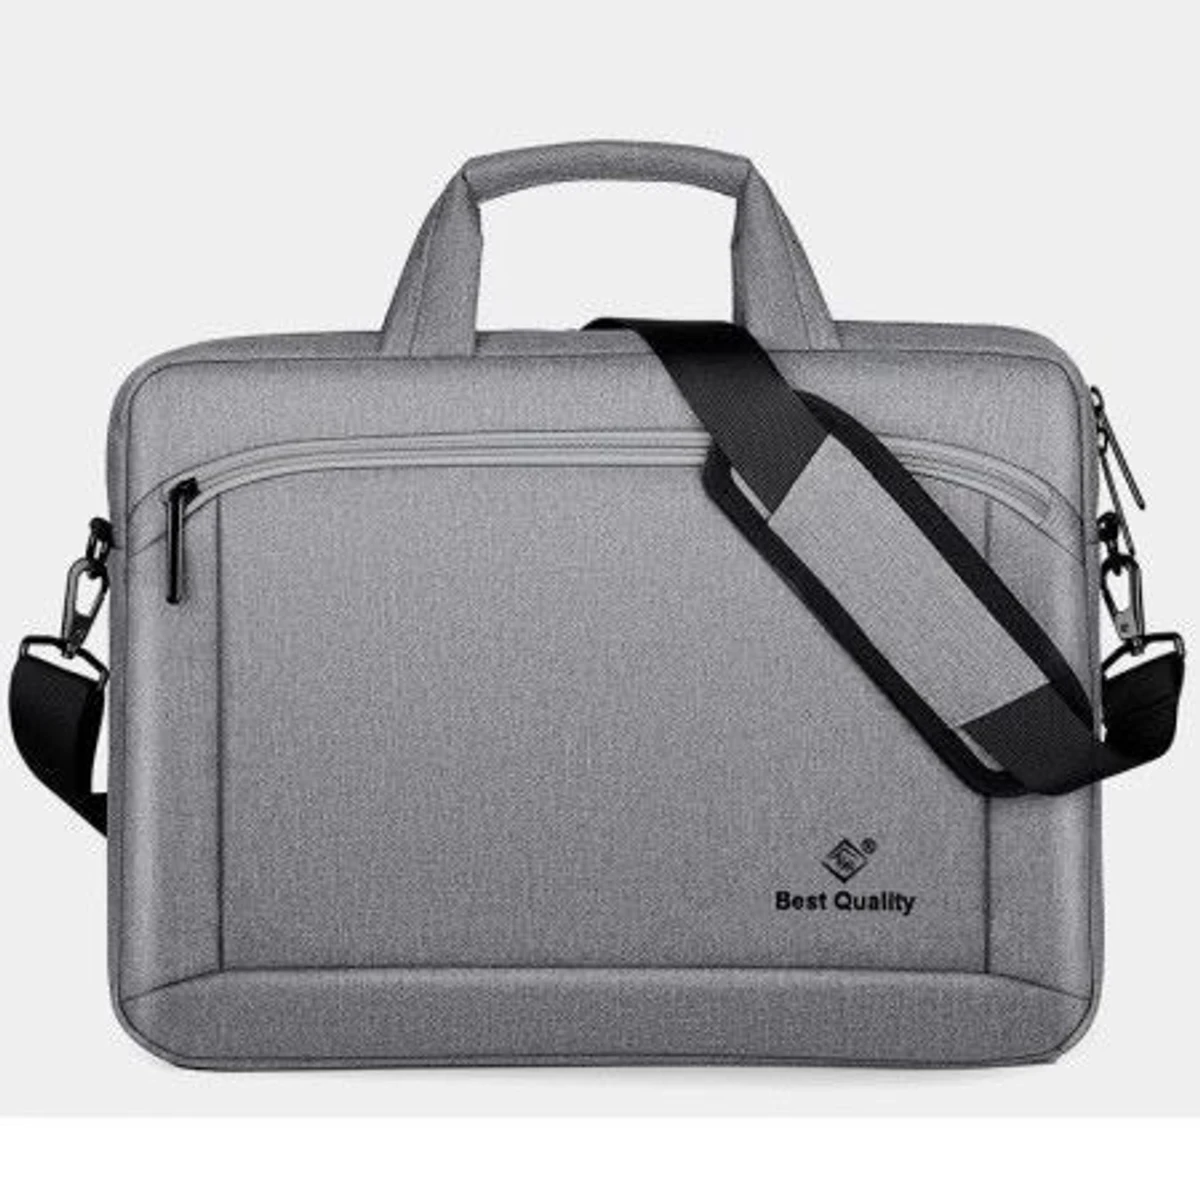 New Laptop Bag Case 15.6, inch Waterproof Notebook Bag for Mackbook Air Pro,15 Inch Laptop Messenger Bag Briefcase